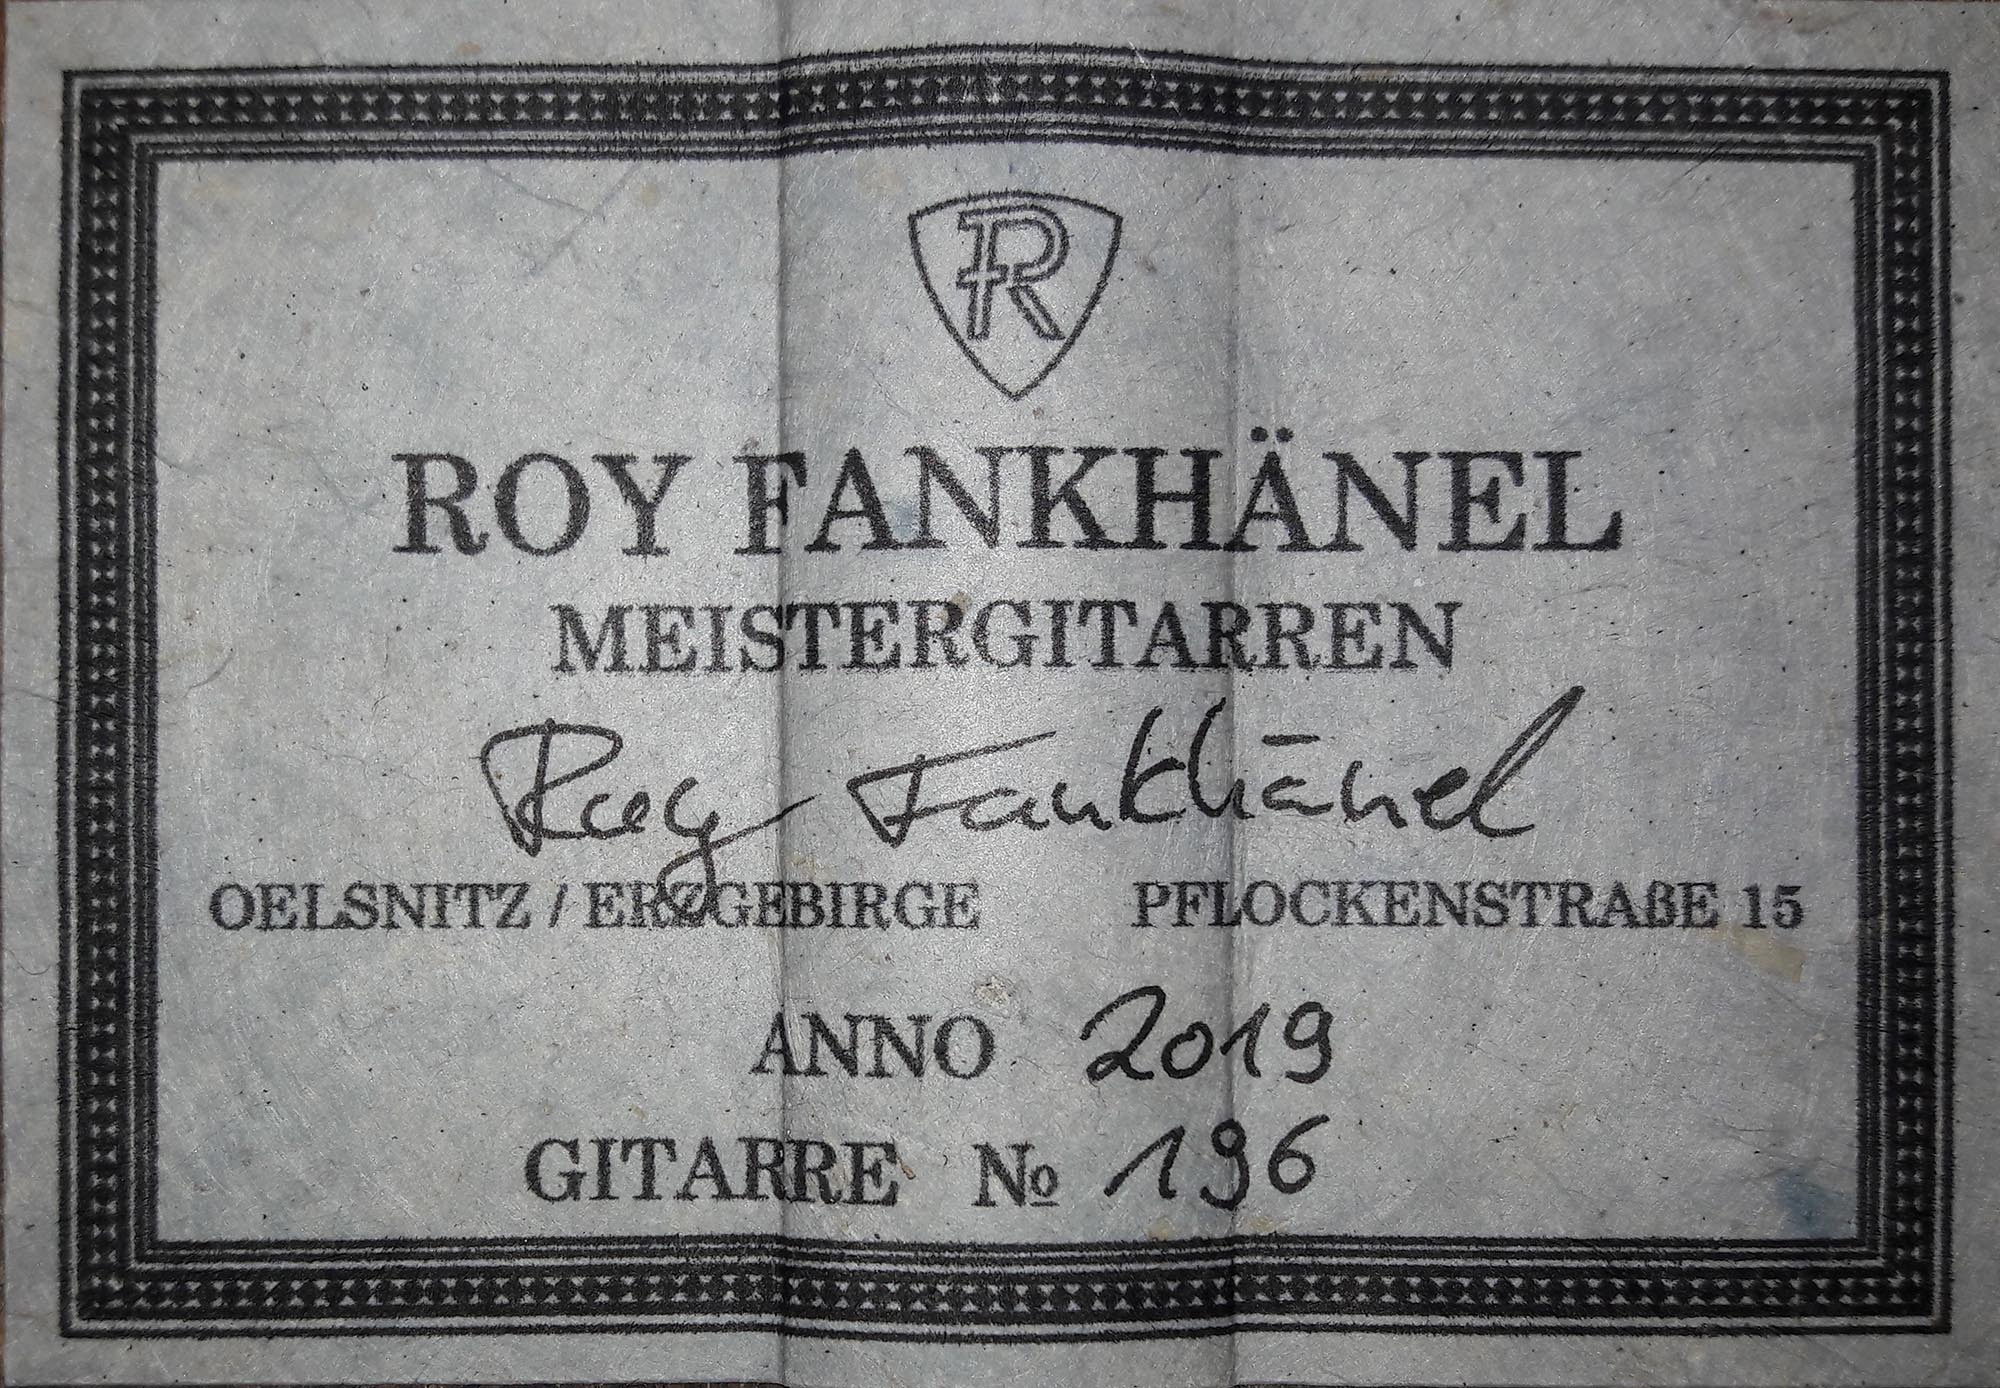 a royfankhänel RF196 18012019 label